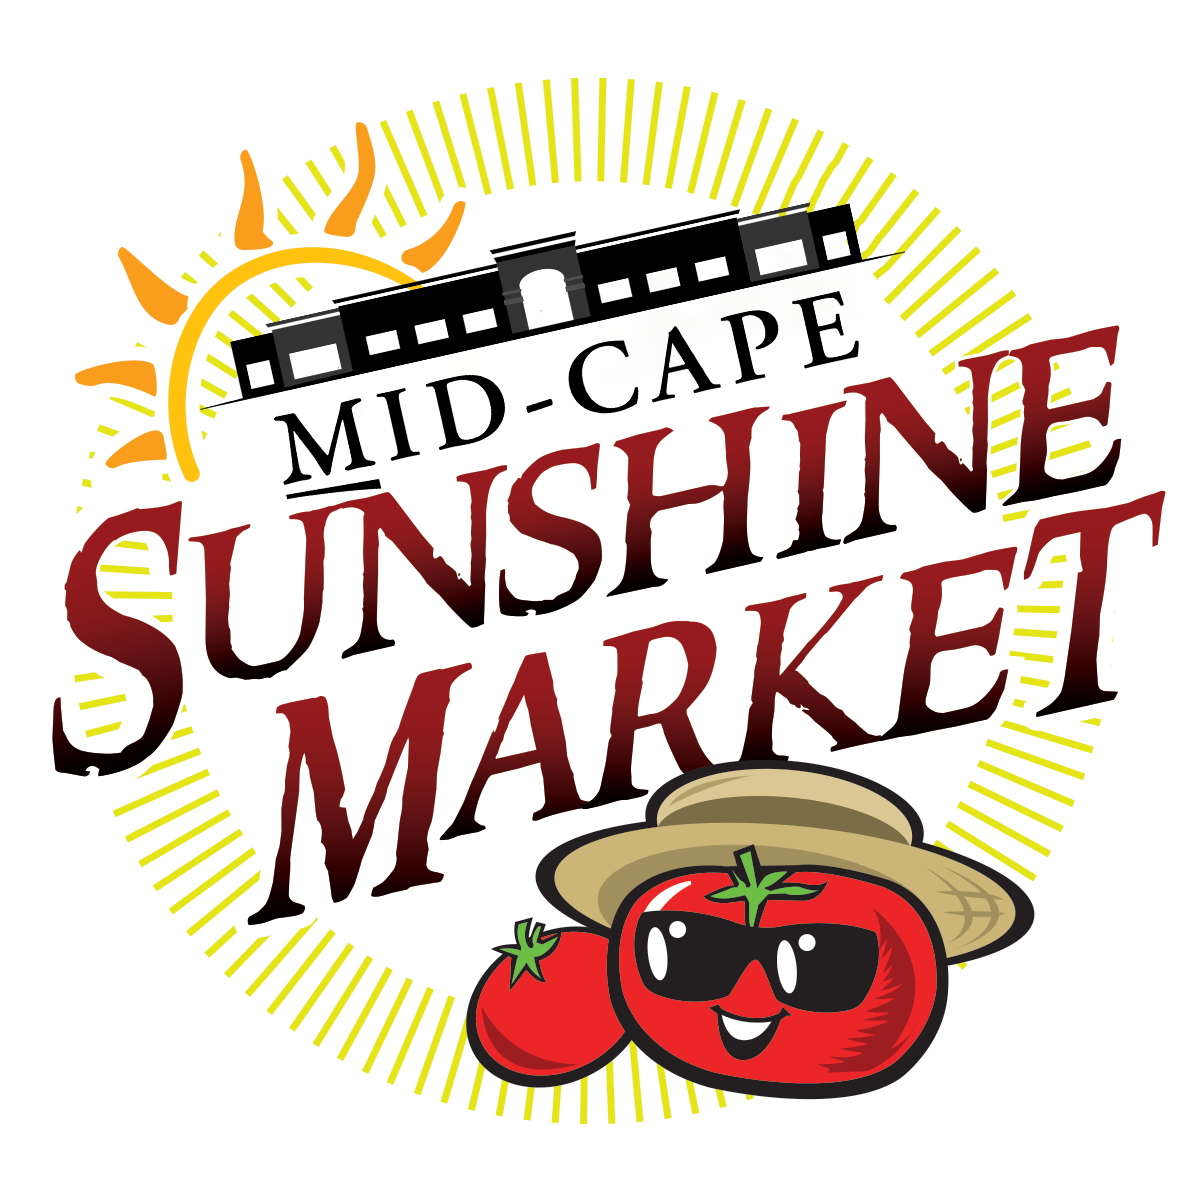 Mid-Cape Sunshine Market